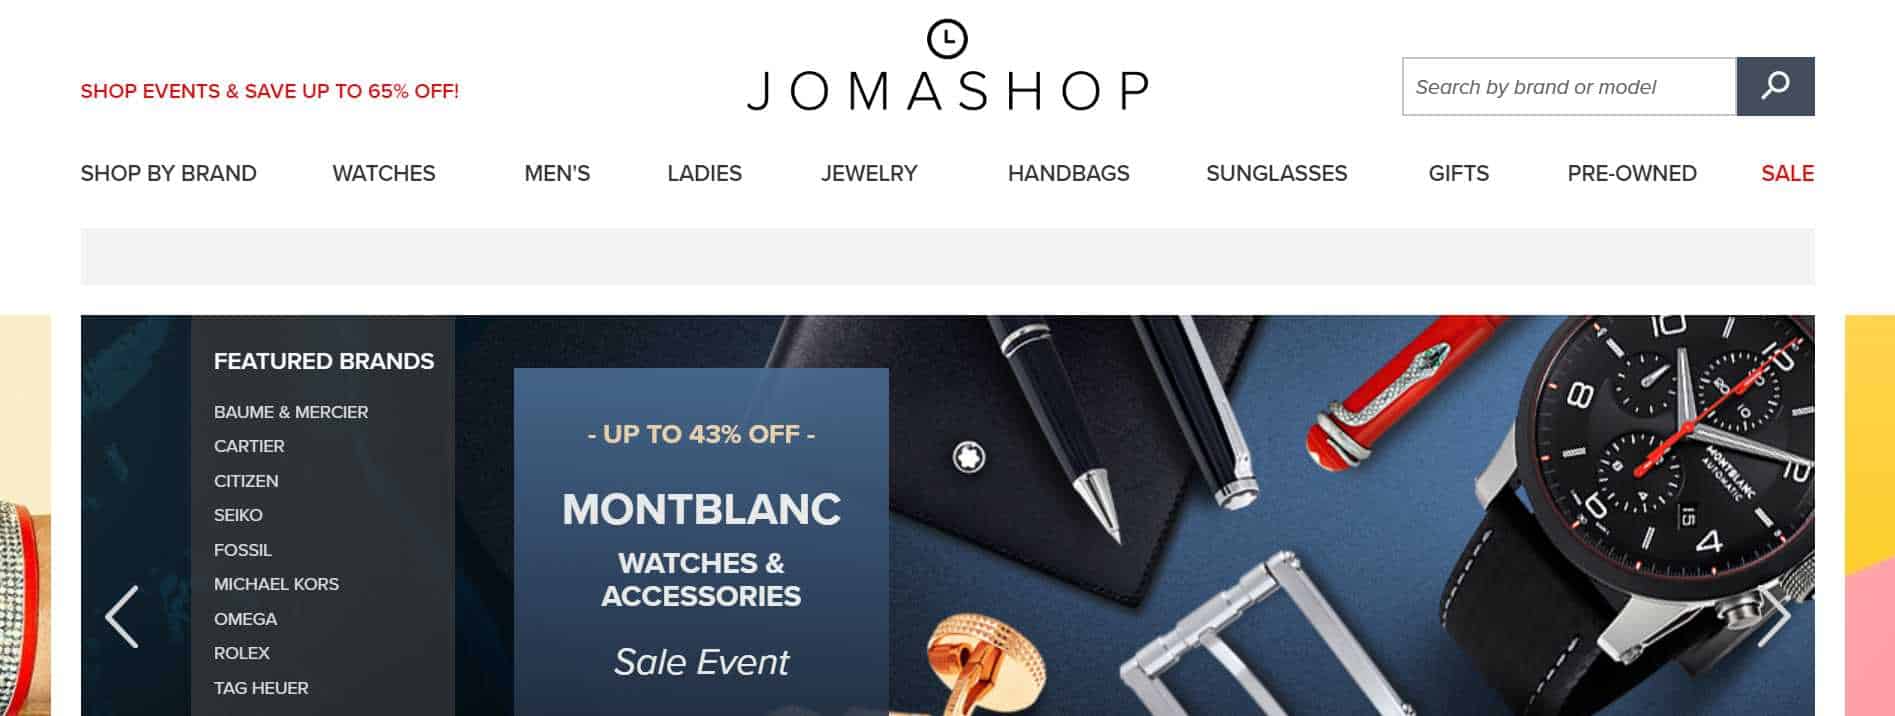 jomashop luxury watches online